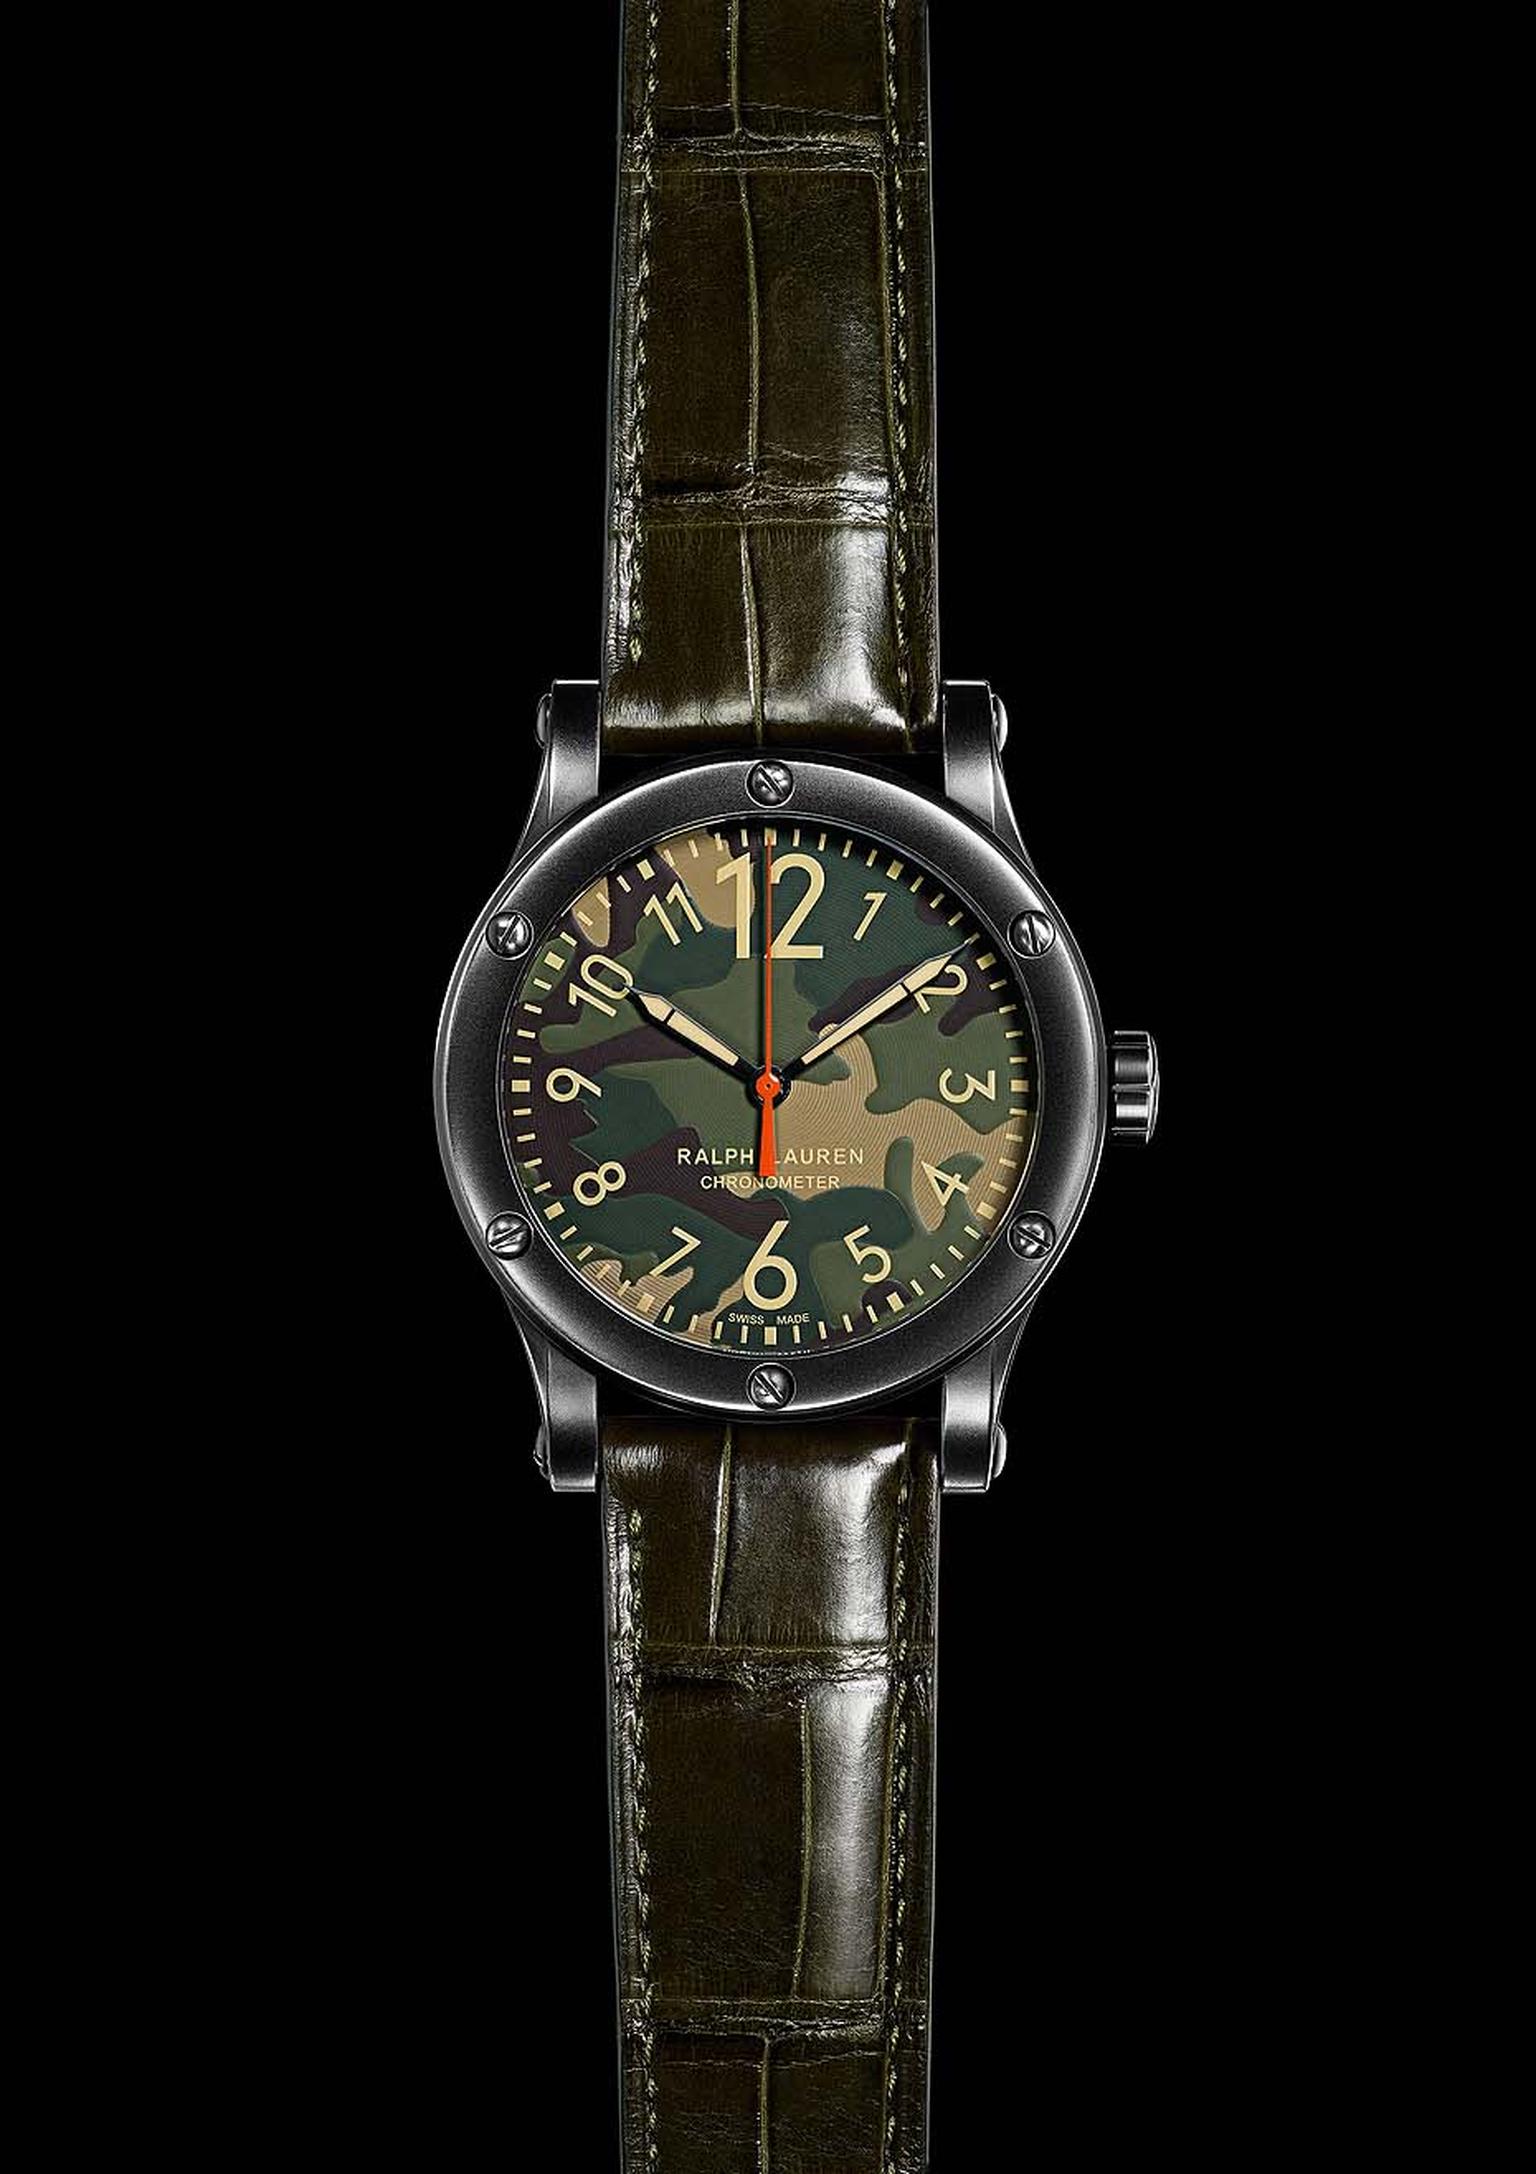 Ralph Lauren watch_Safari_Cami Chronomoter.jpg